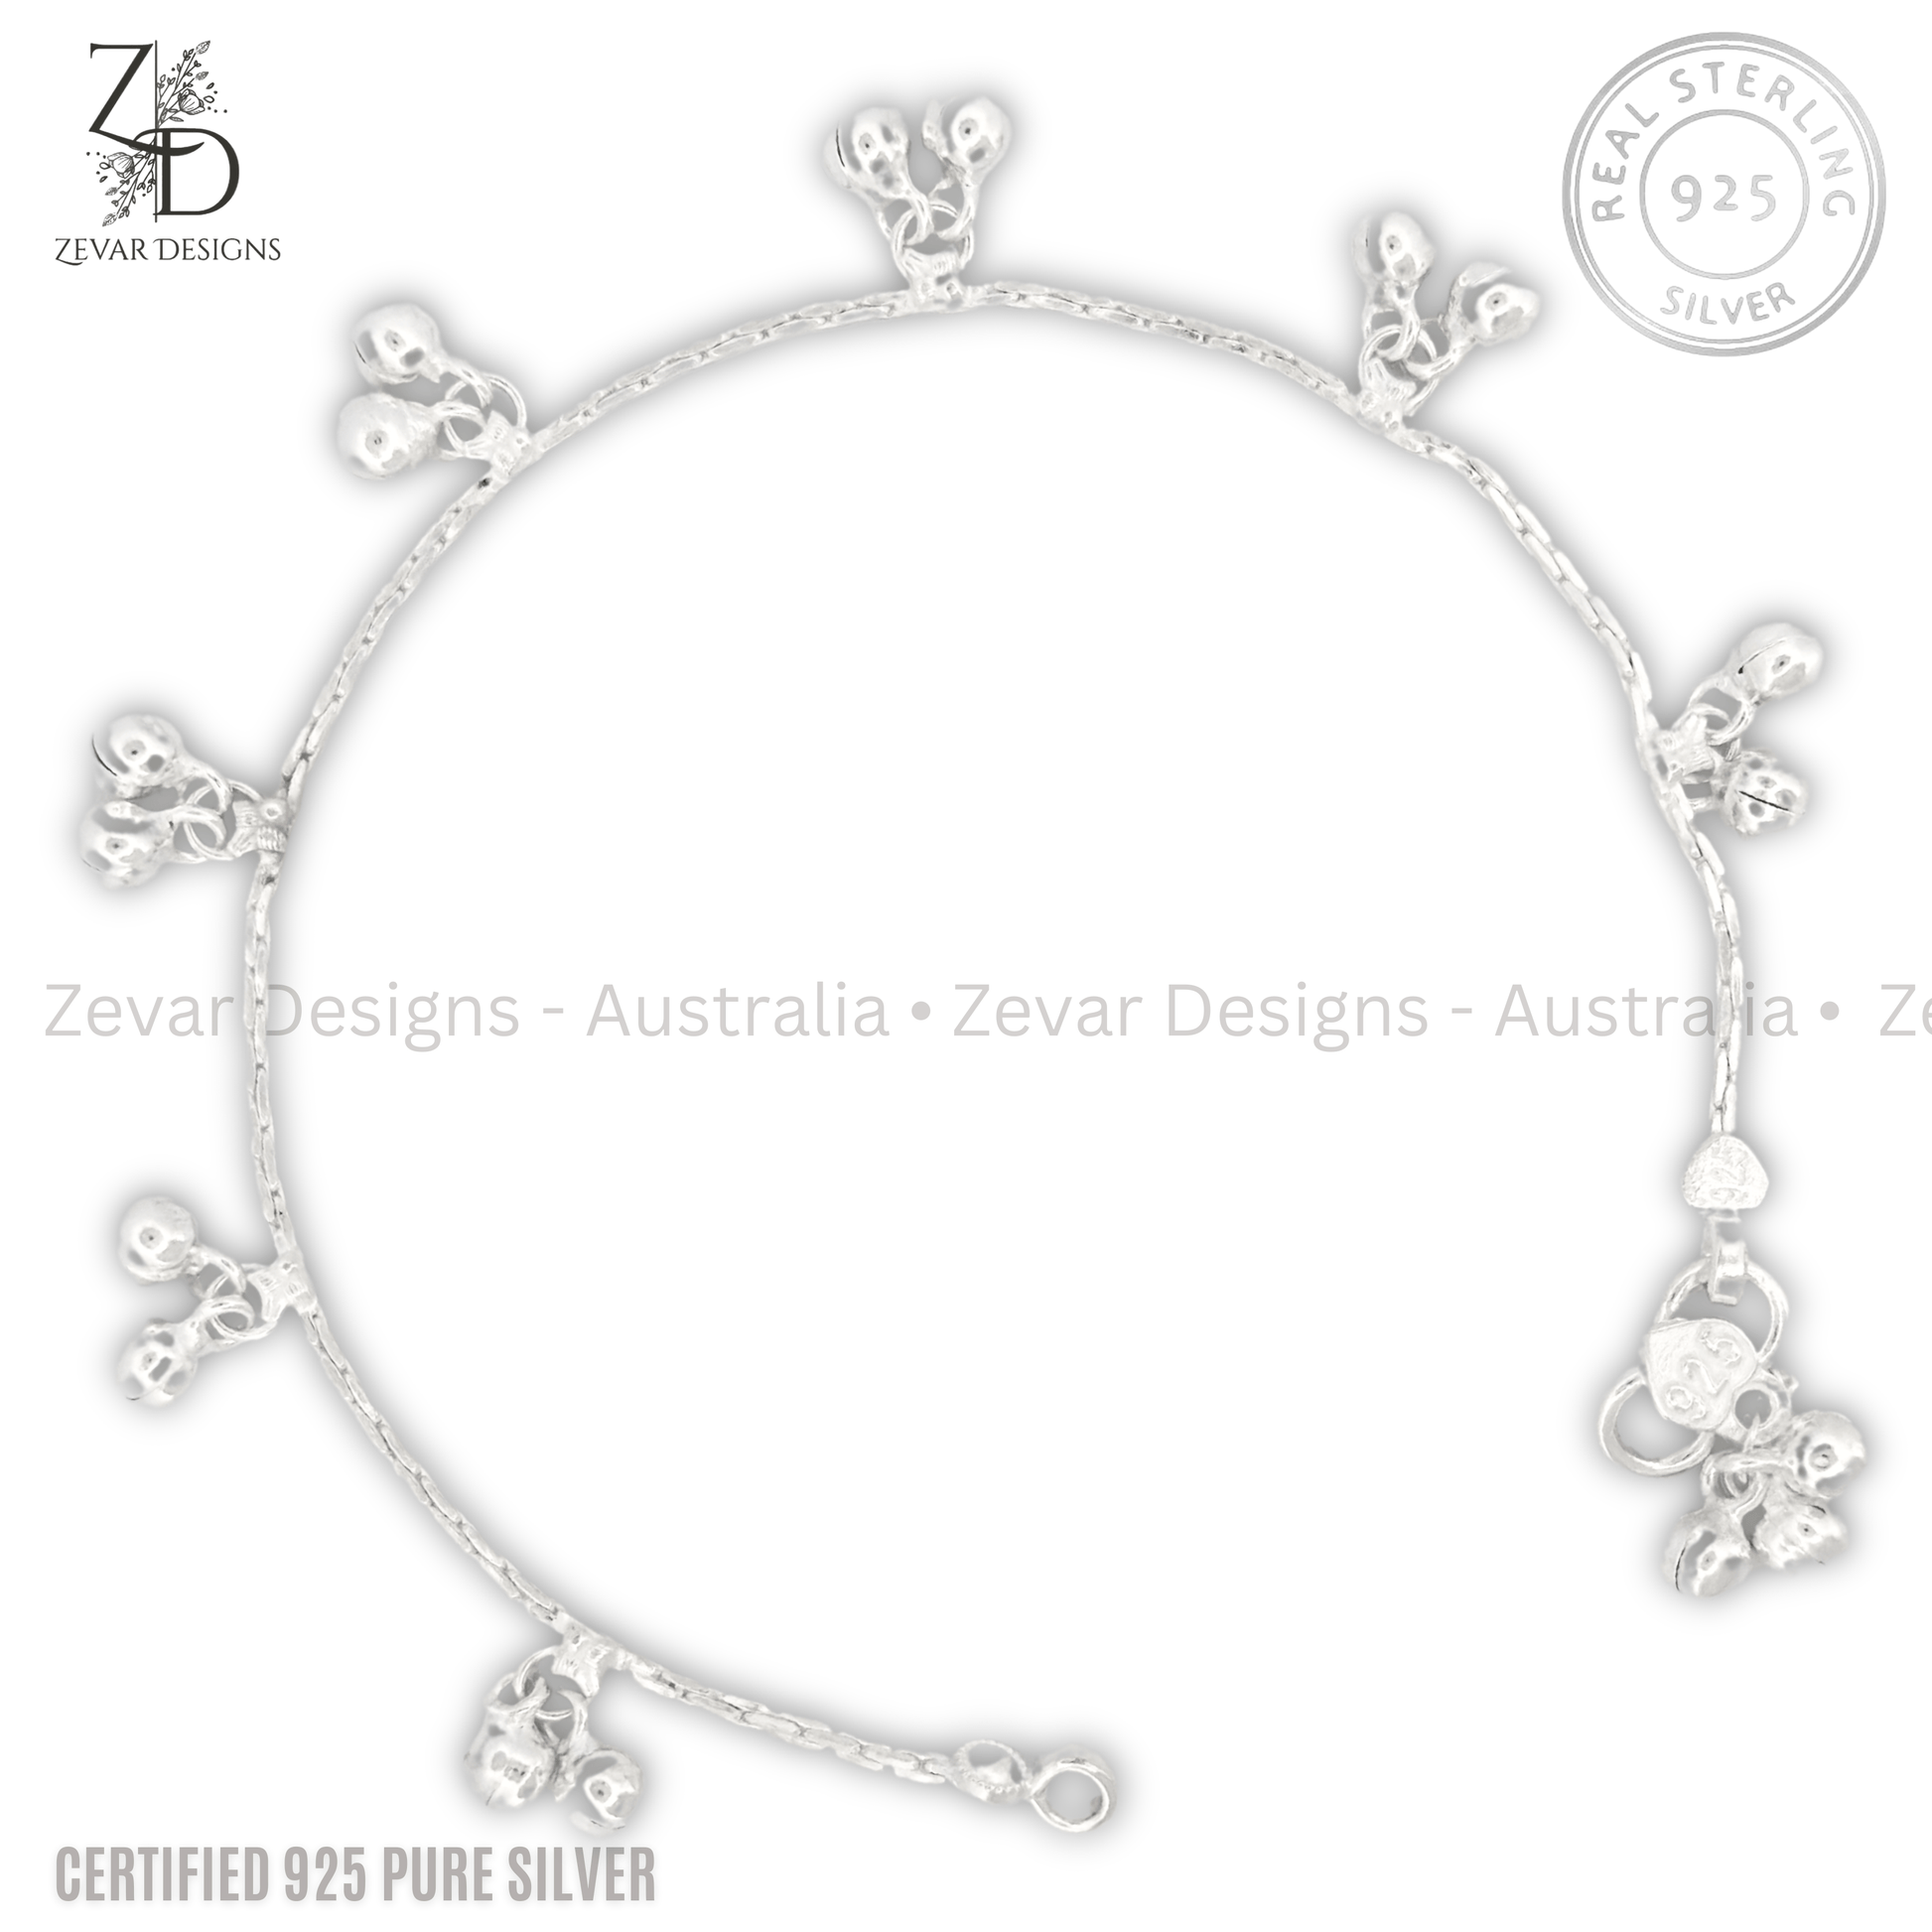 Zevar Designs 925 Silver baby-anklets Teenage 925 Silver Anklet - Pair